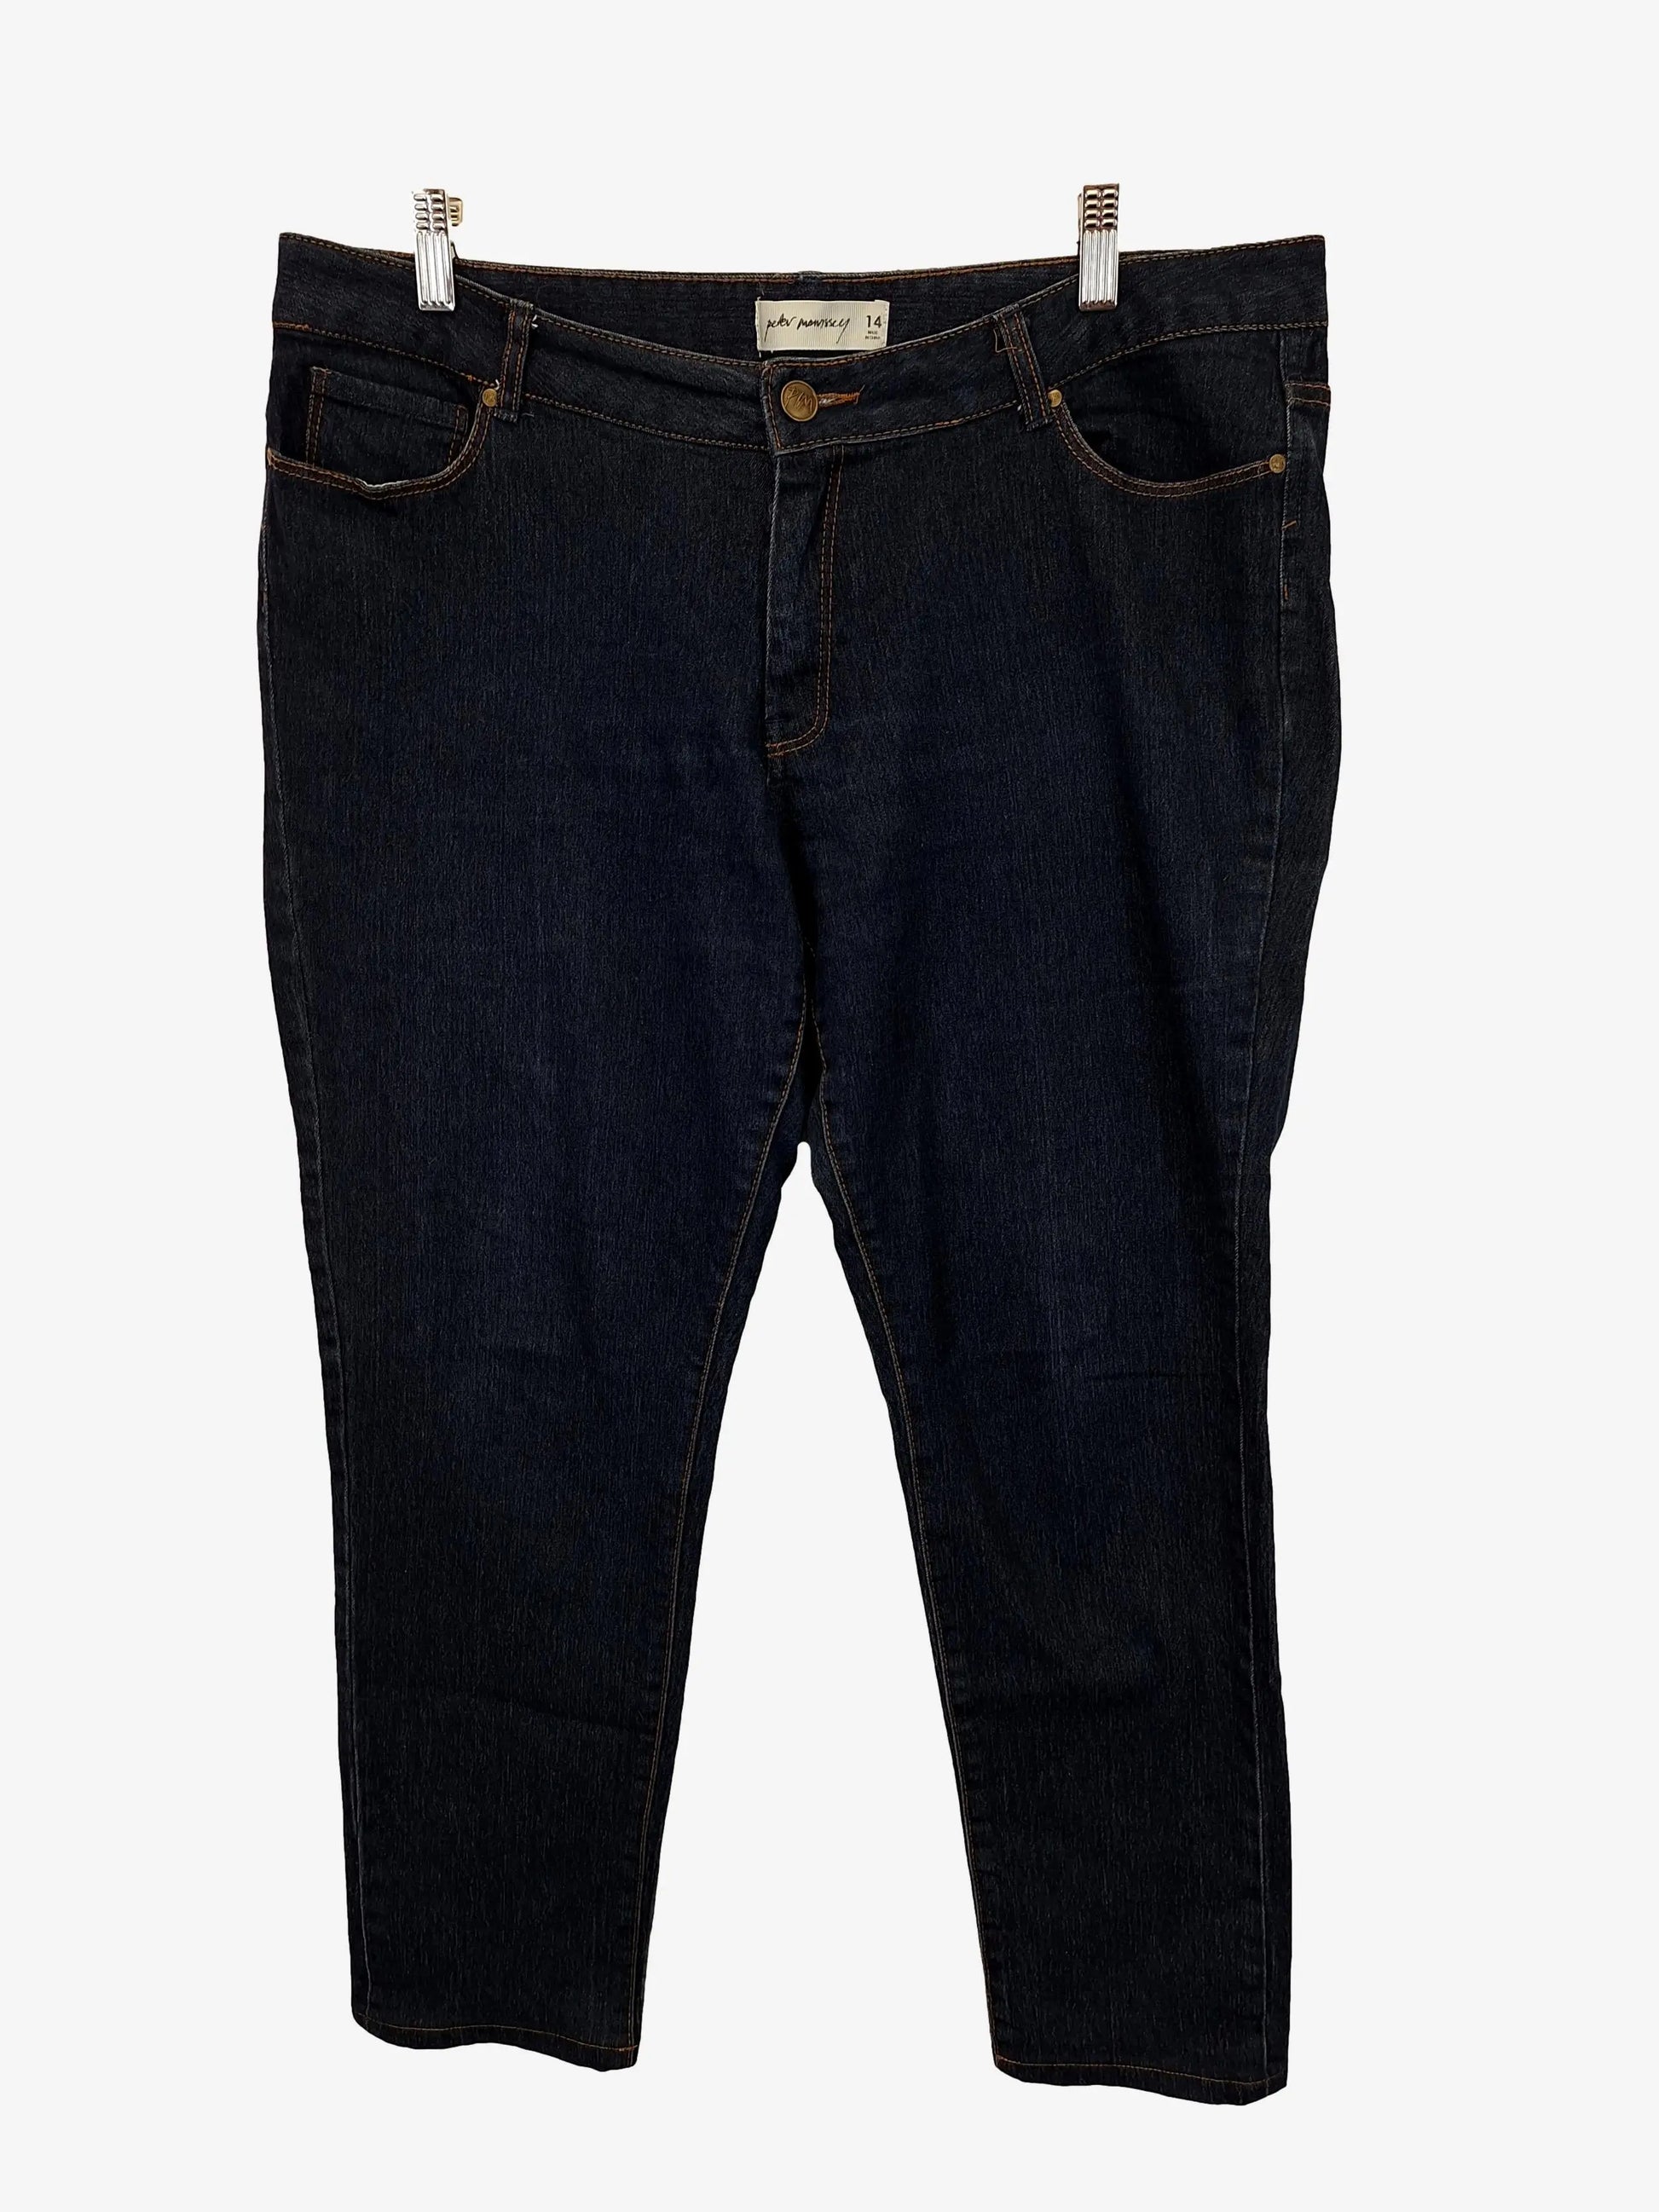 Peter Morrissey Dark Denim Industrial Jeans Size 14 by SwapUp-Online Second Hand Store-Online Thrift Store